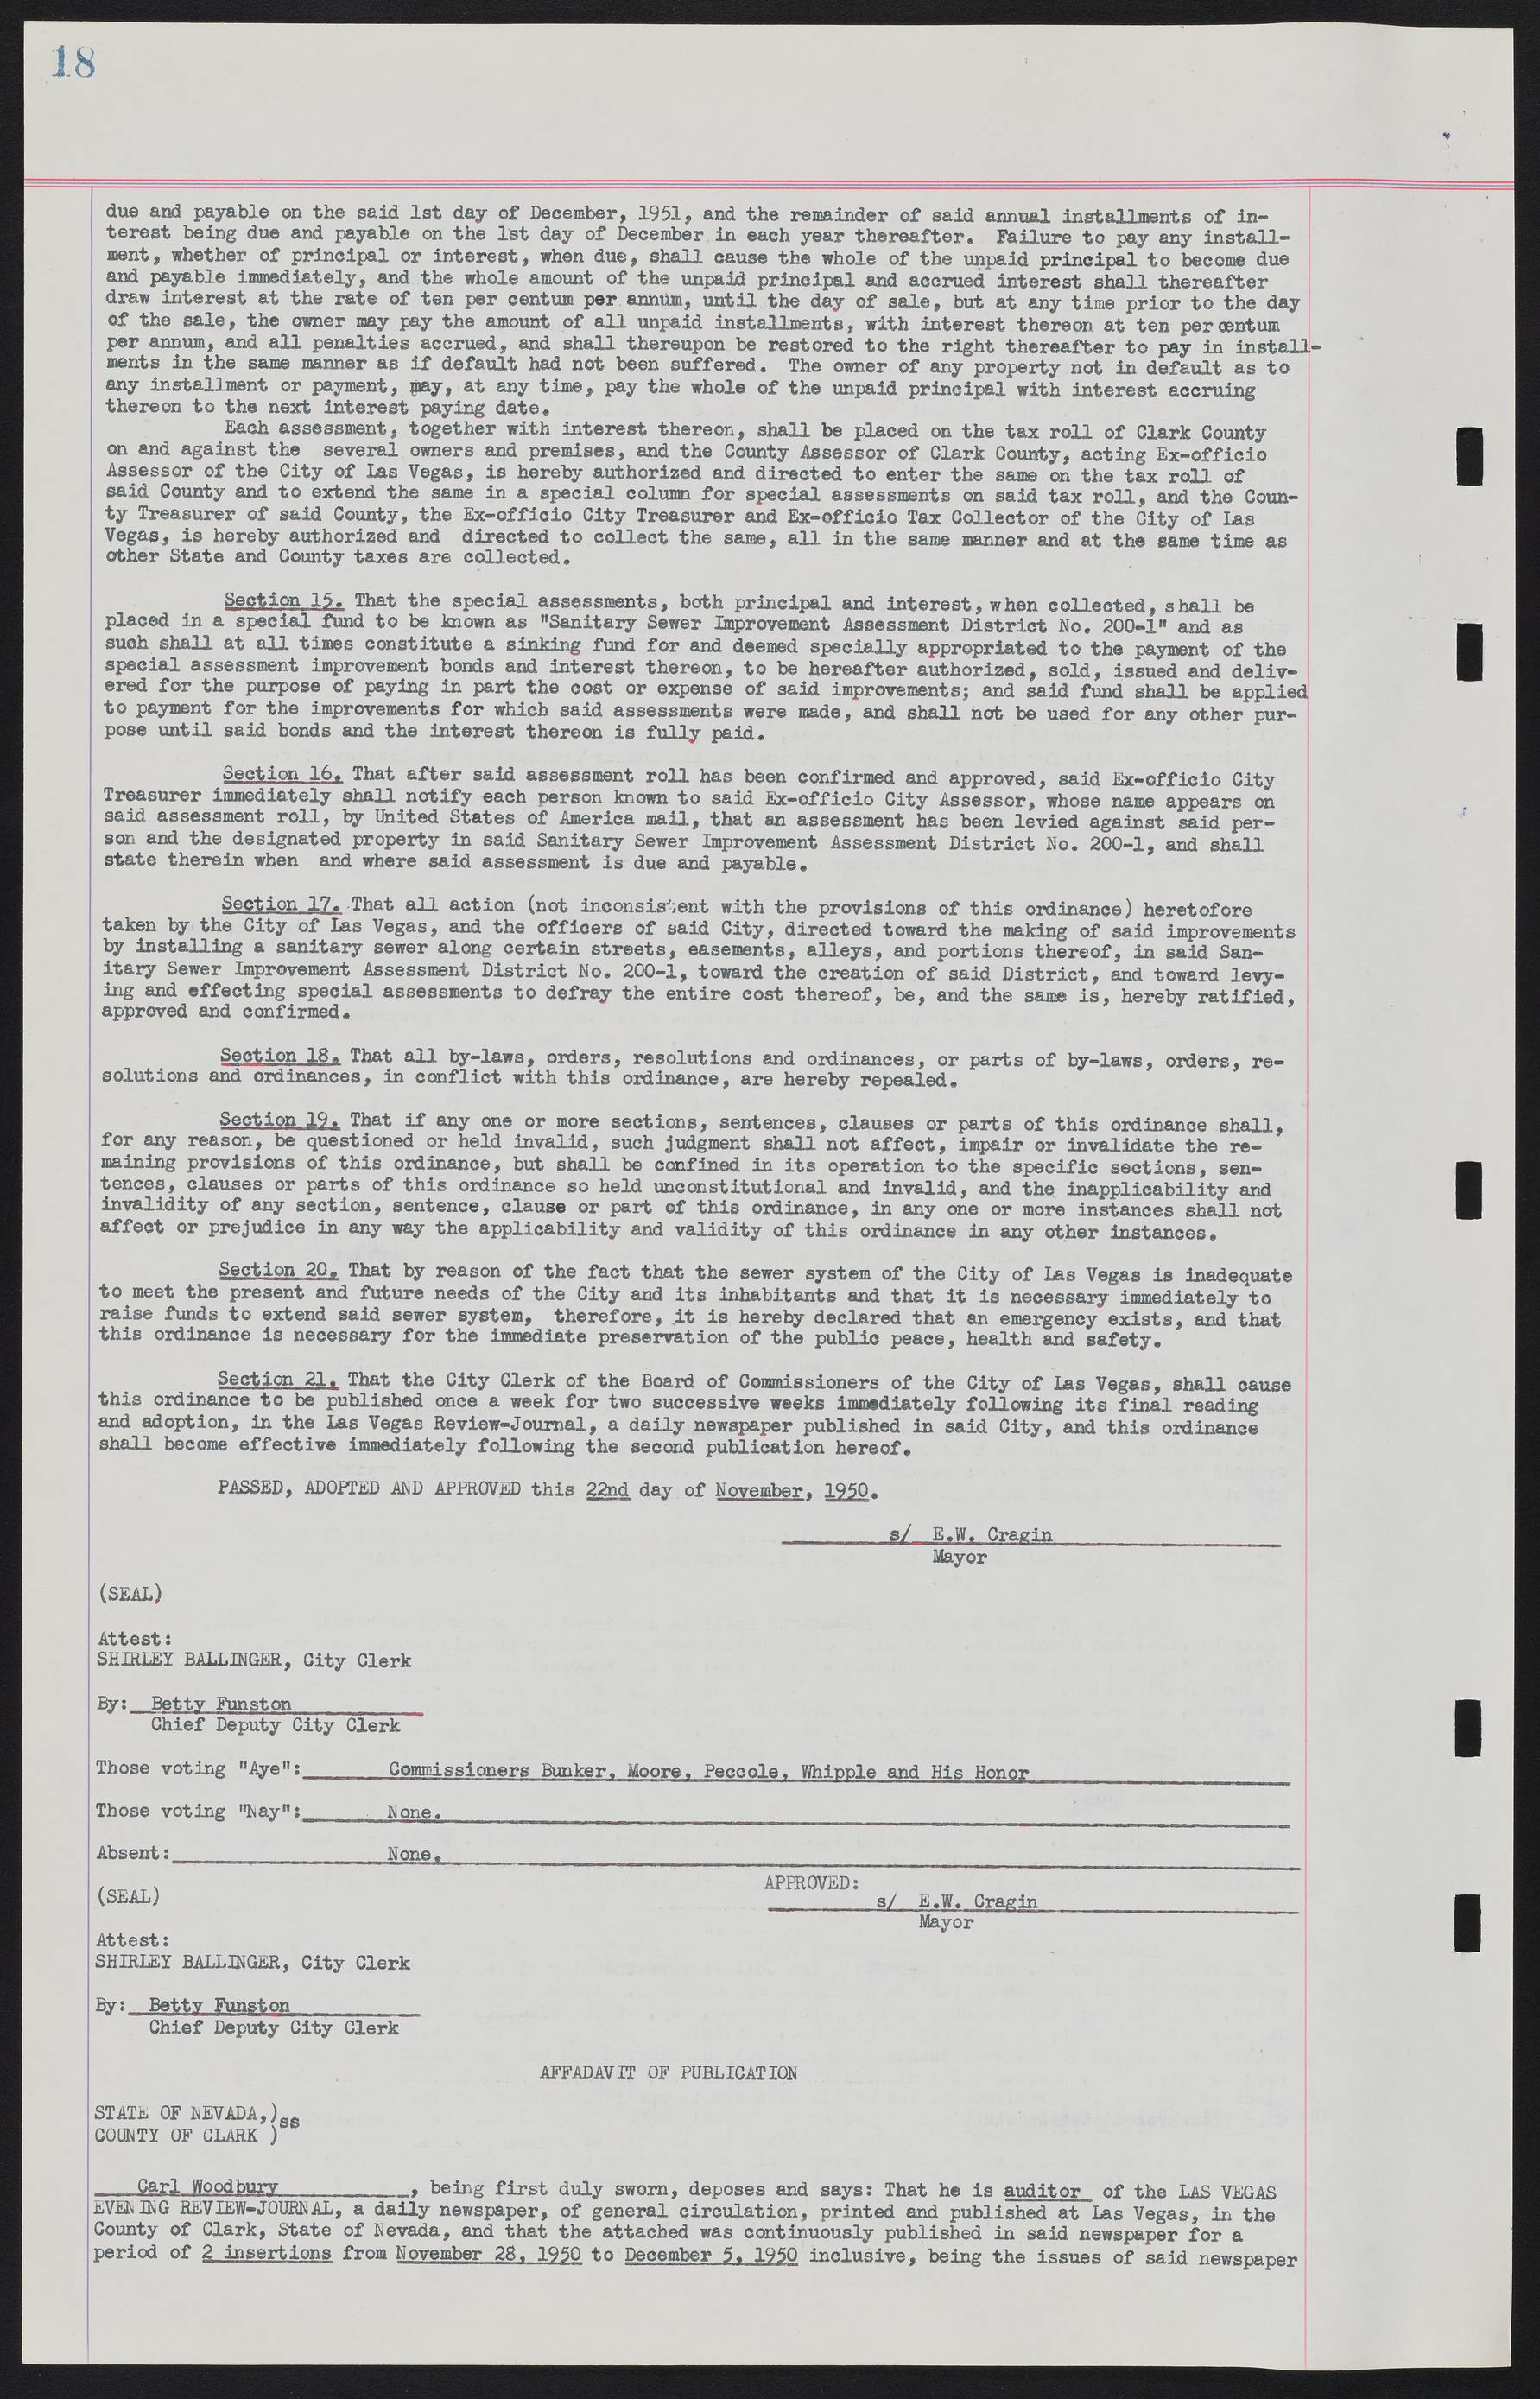 Las Vegas City Ordinances, November 13, 1950 to August 6, 1958, lvc000015-26